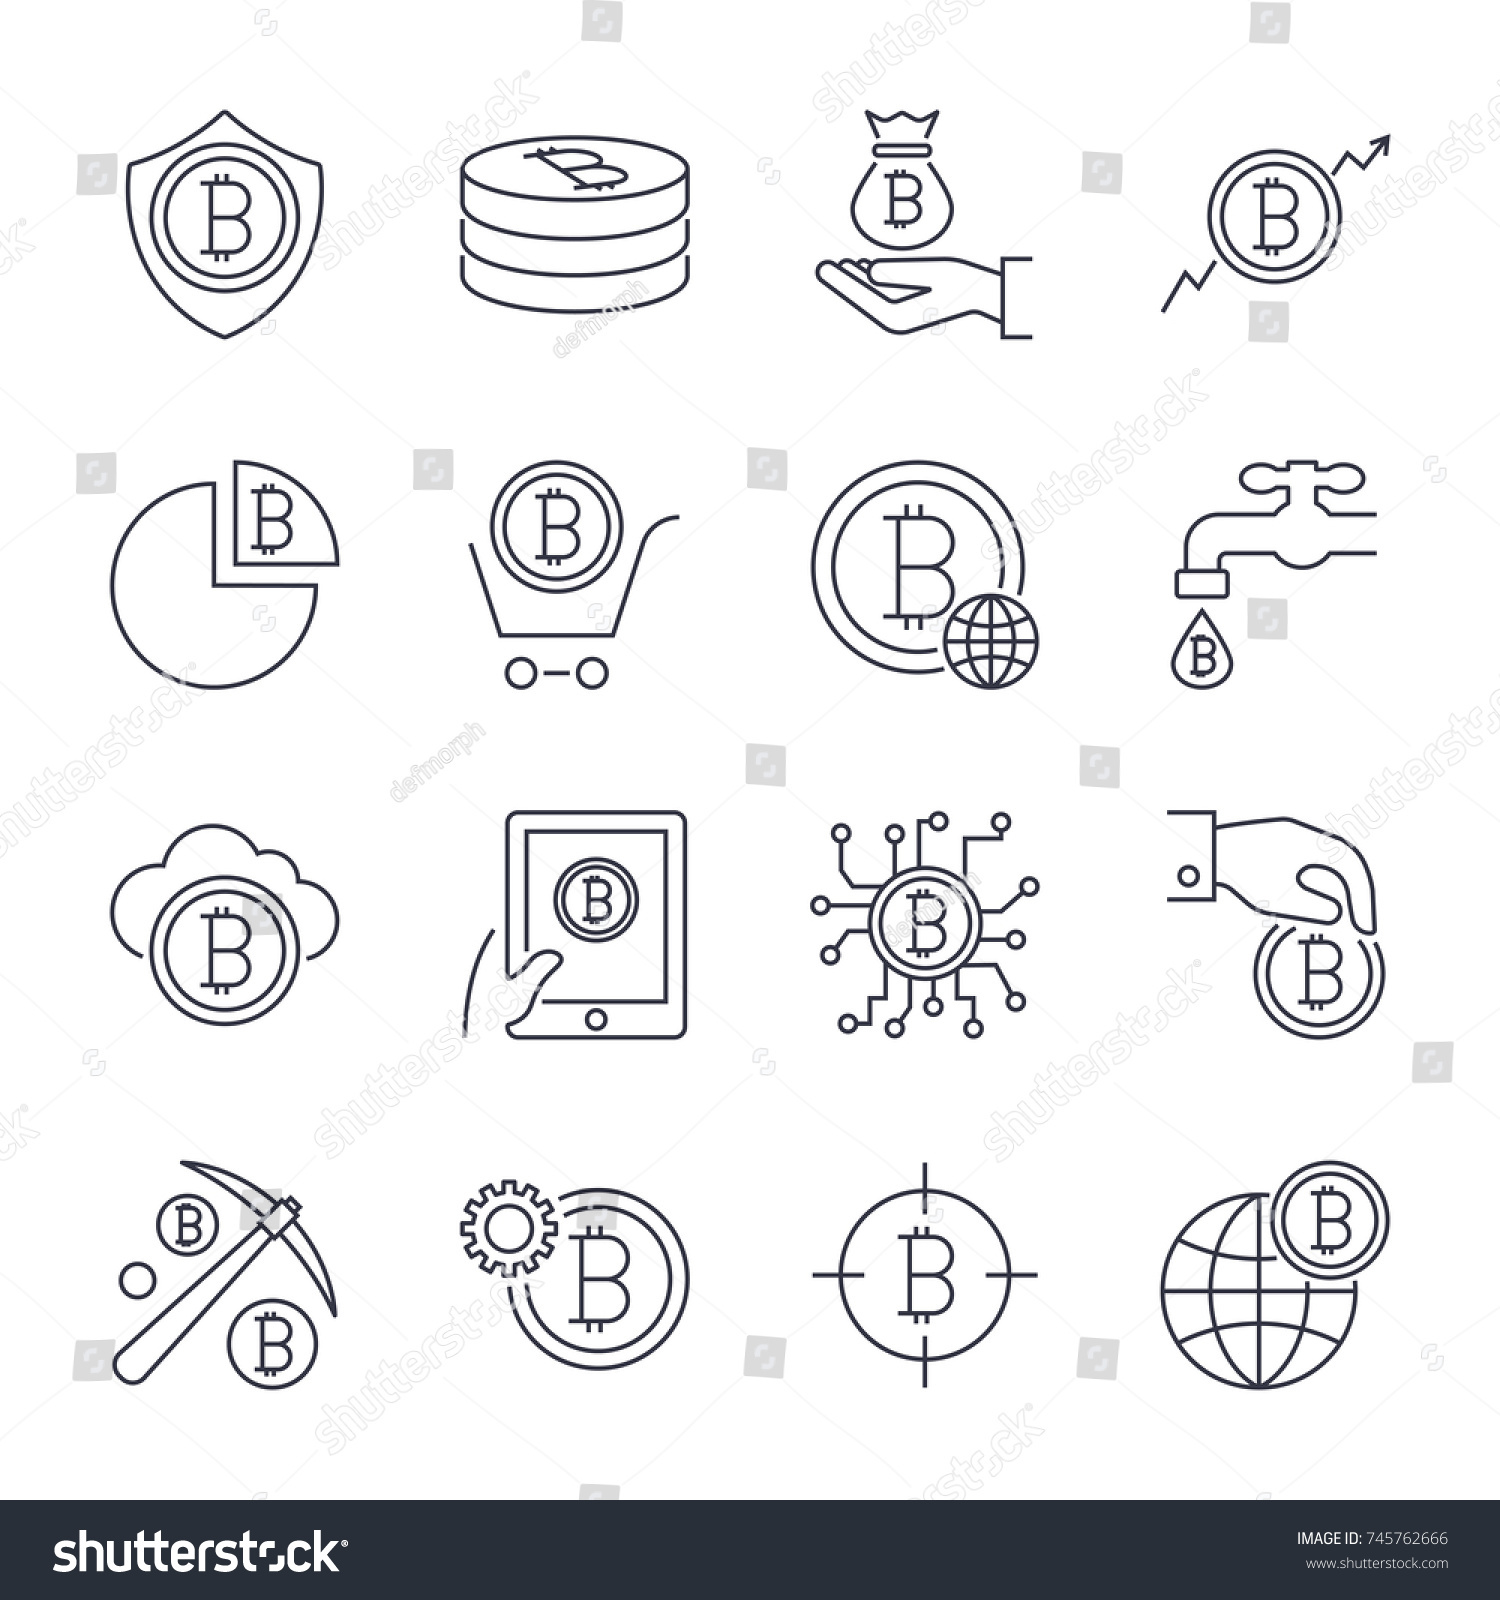 Bitcoin Icons Set Online Money Symbol Stock Vector Royalty Free - 